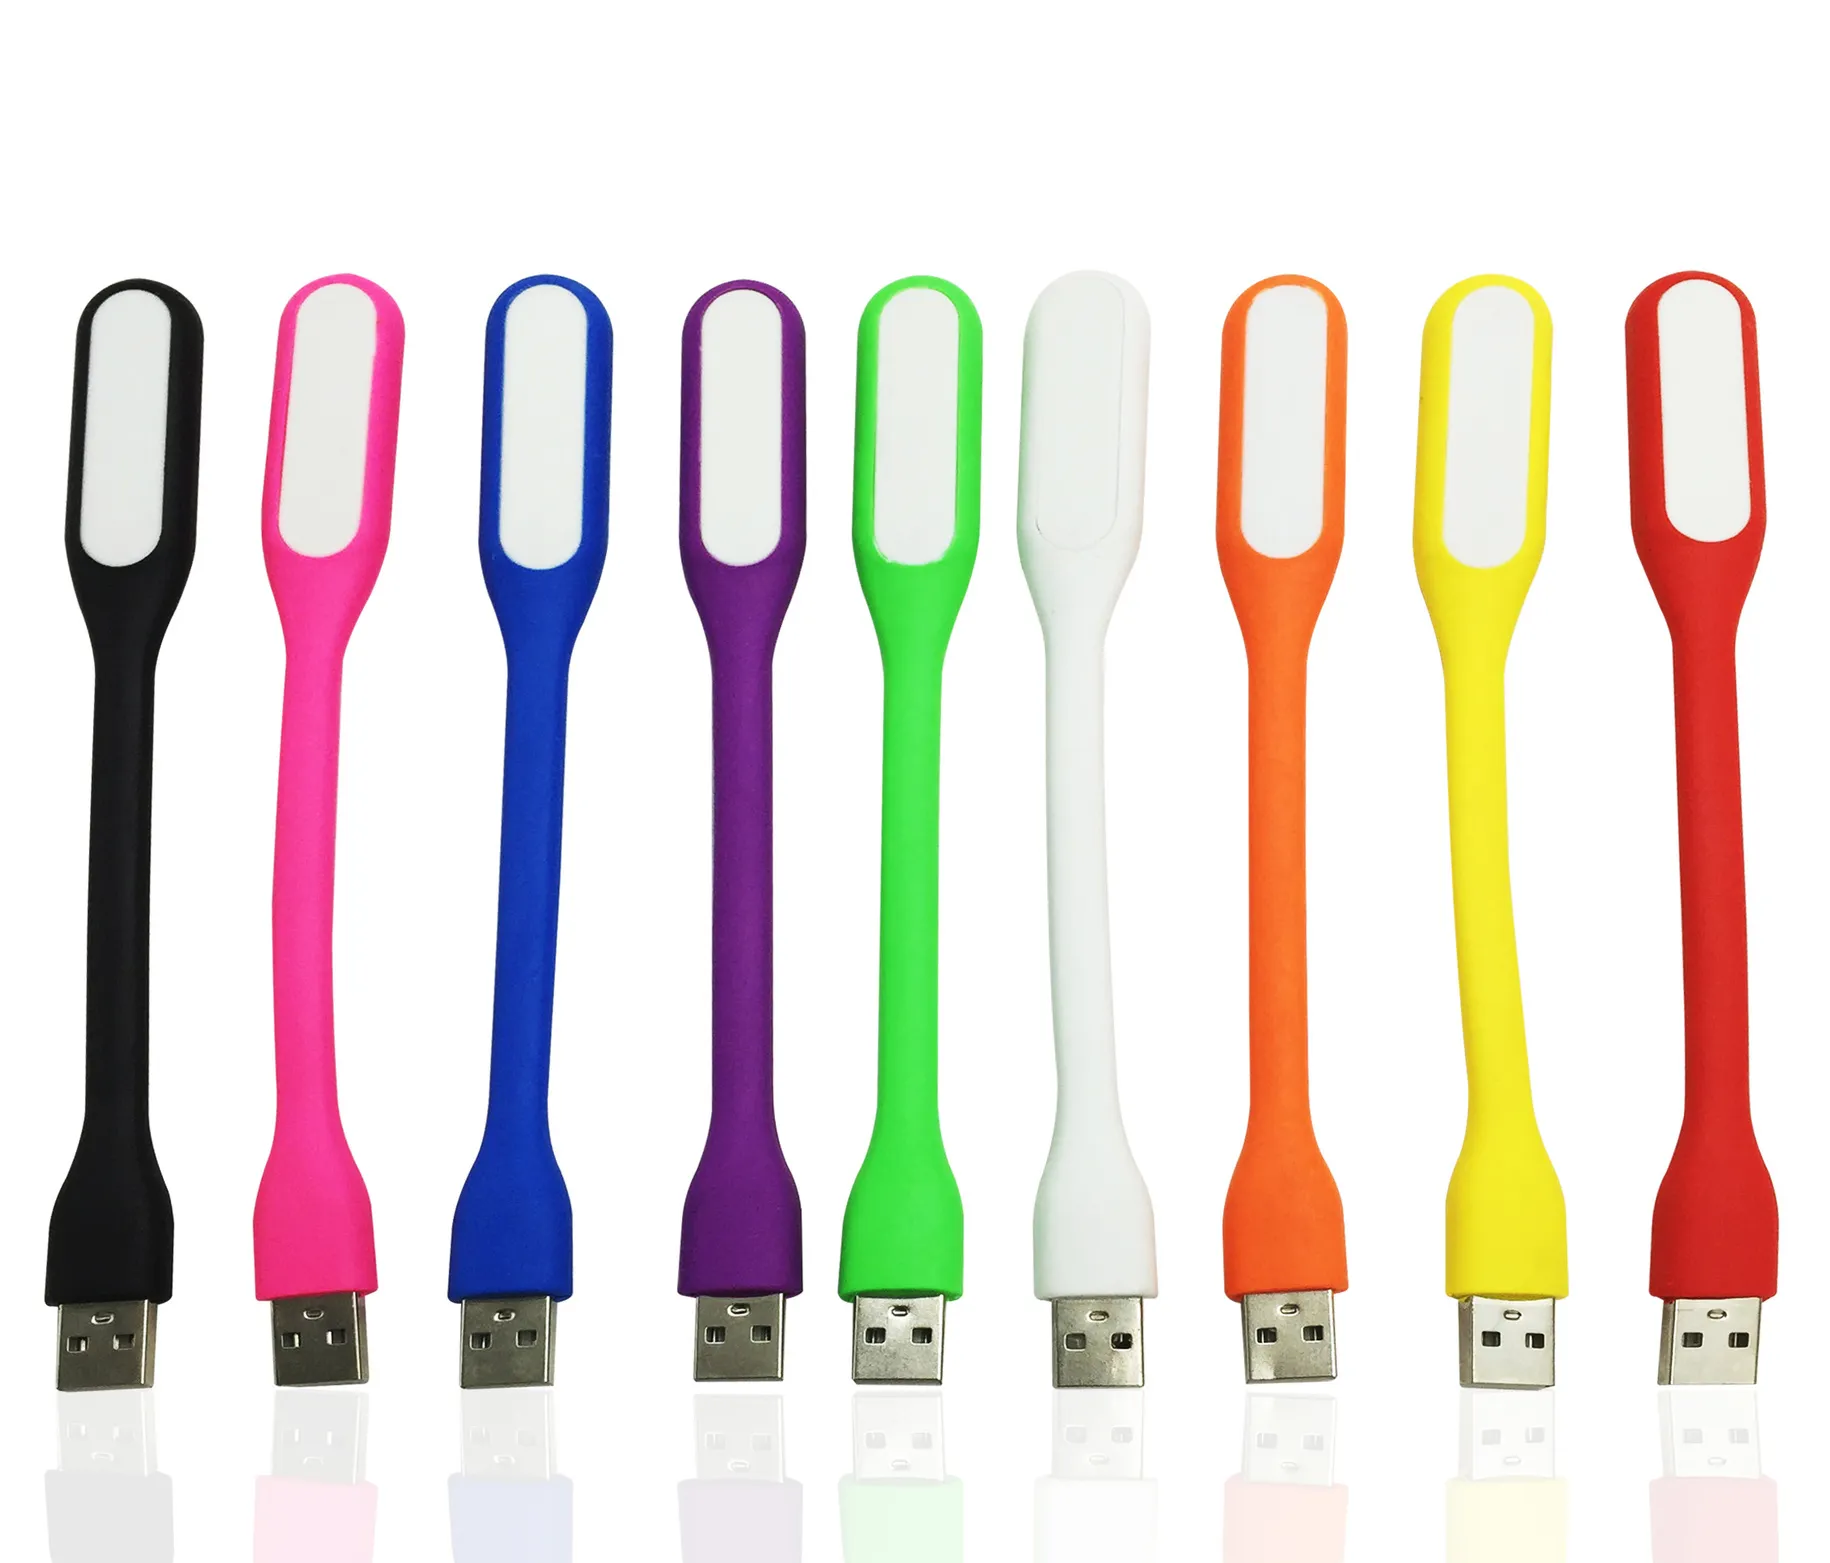 OEM USB LED Lampe LED-Licht tragbare flexible biegsame Xiaomi USB-Licht für Notebook Laptop Tablet Power Bank USB-Gadgets